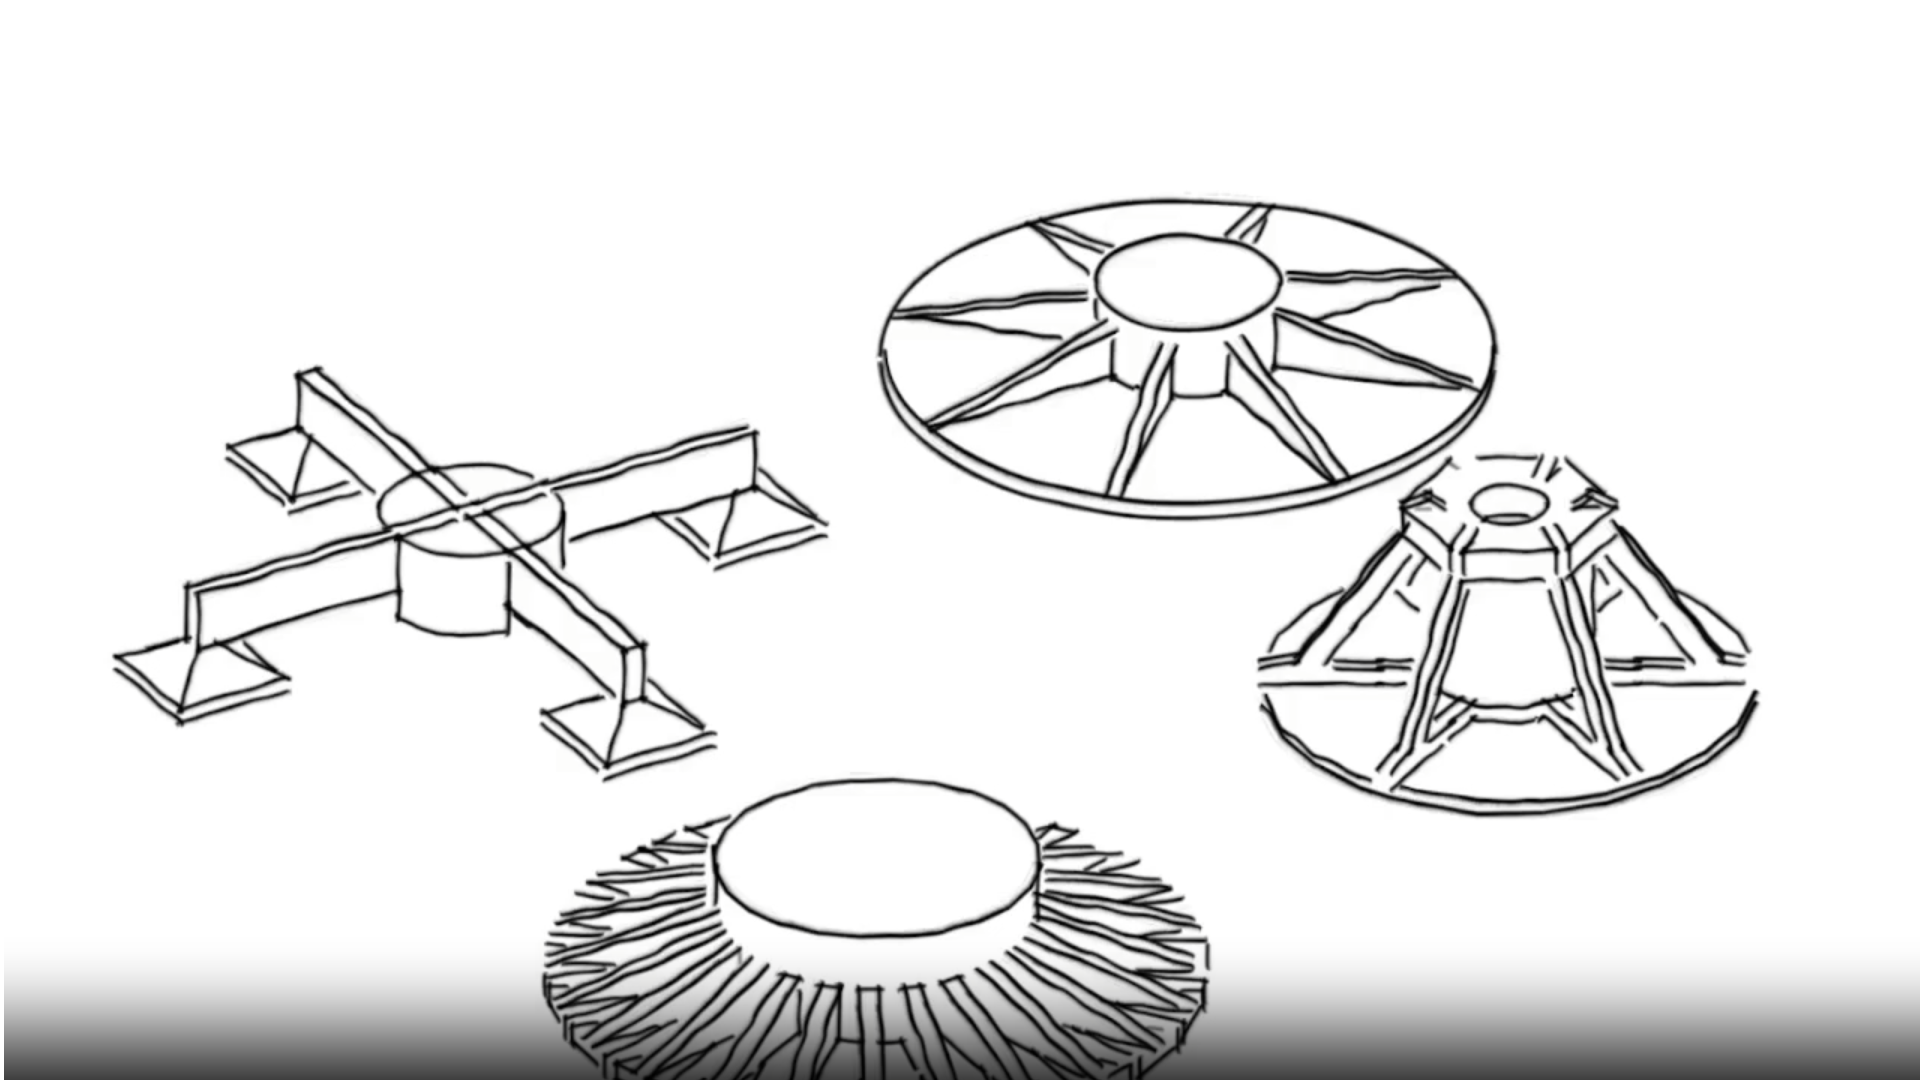 Concrete laminar wind turbine foundations: a video presentation of the concept